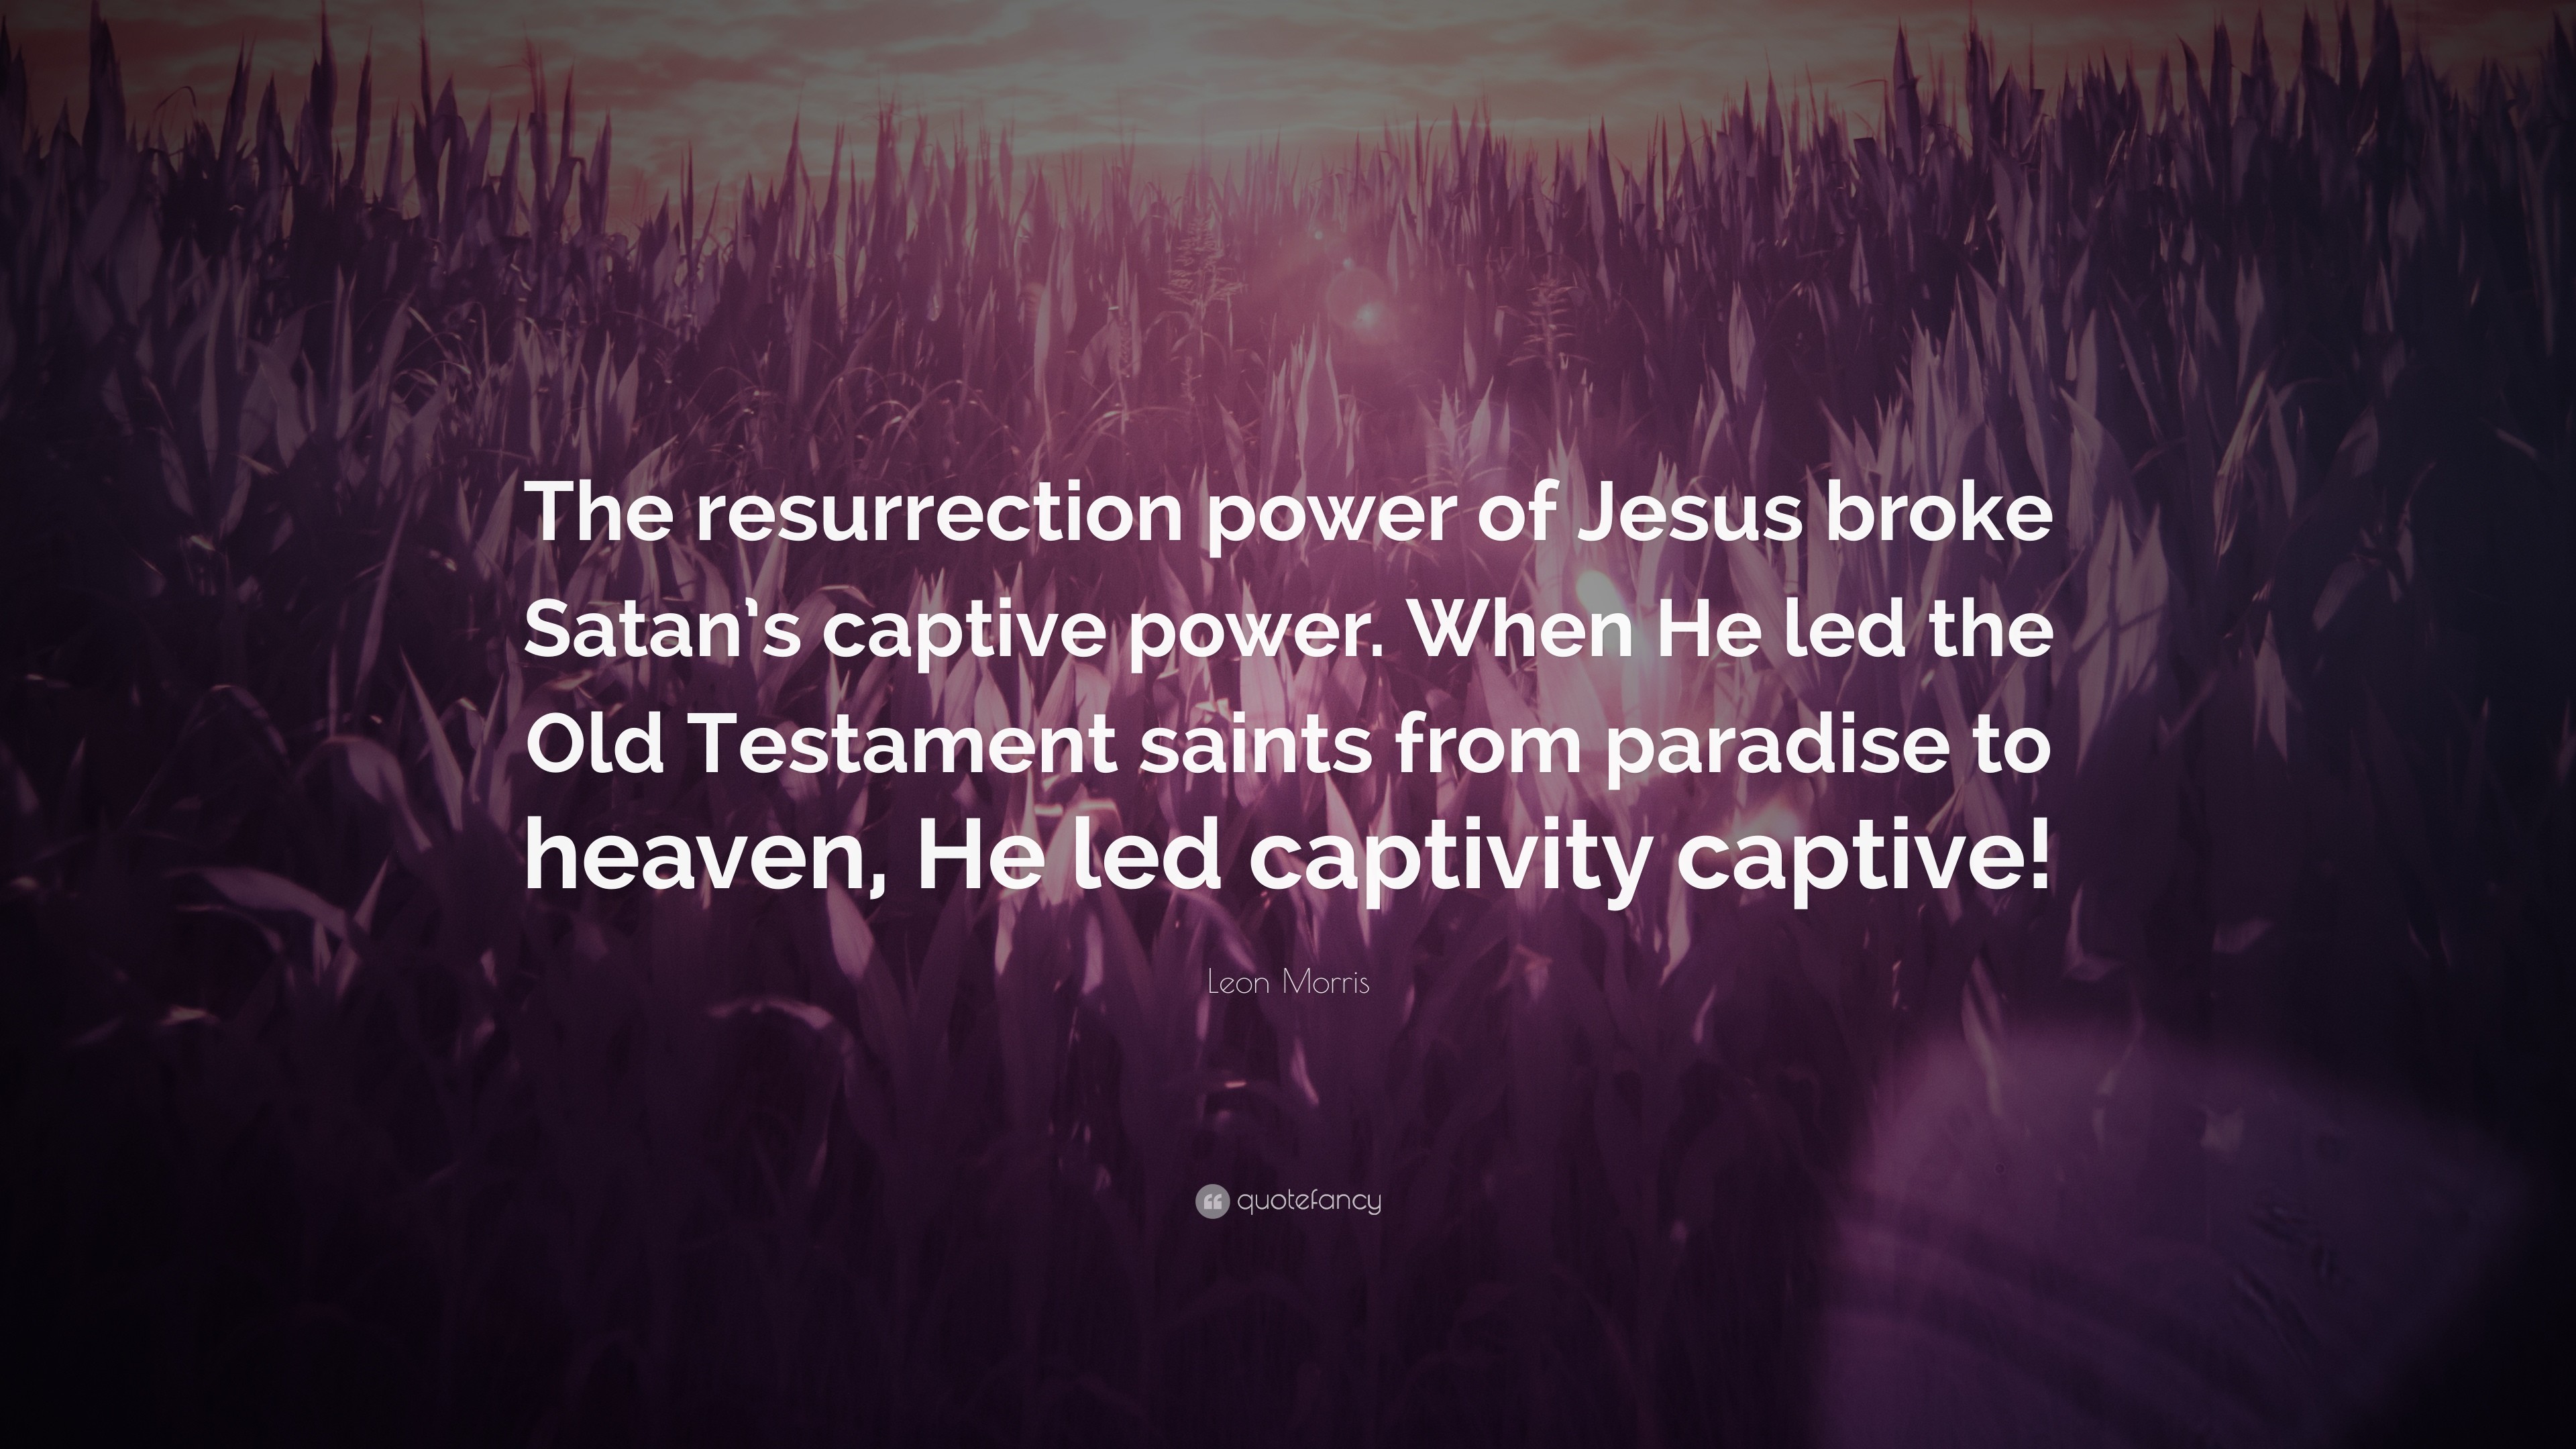 3840x2160 Leon Morris Quote: “The resurrection power of Jesus broke Satan's captive  power. When